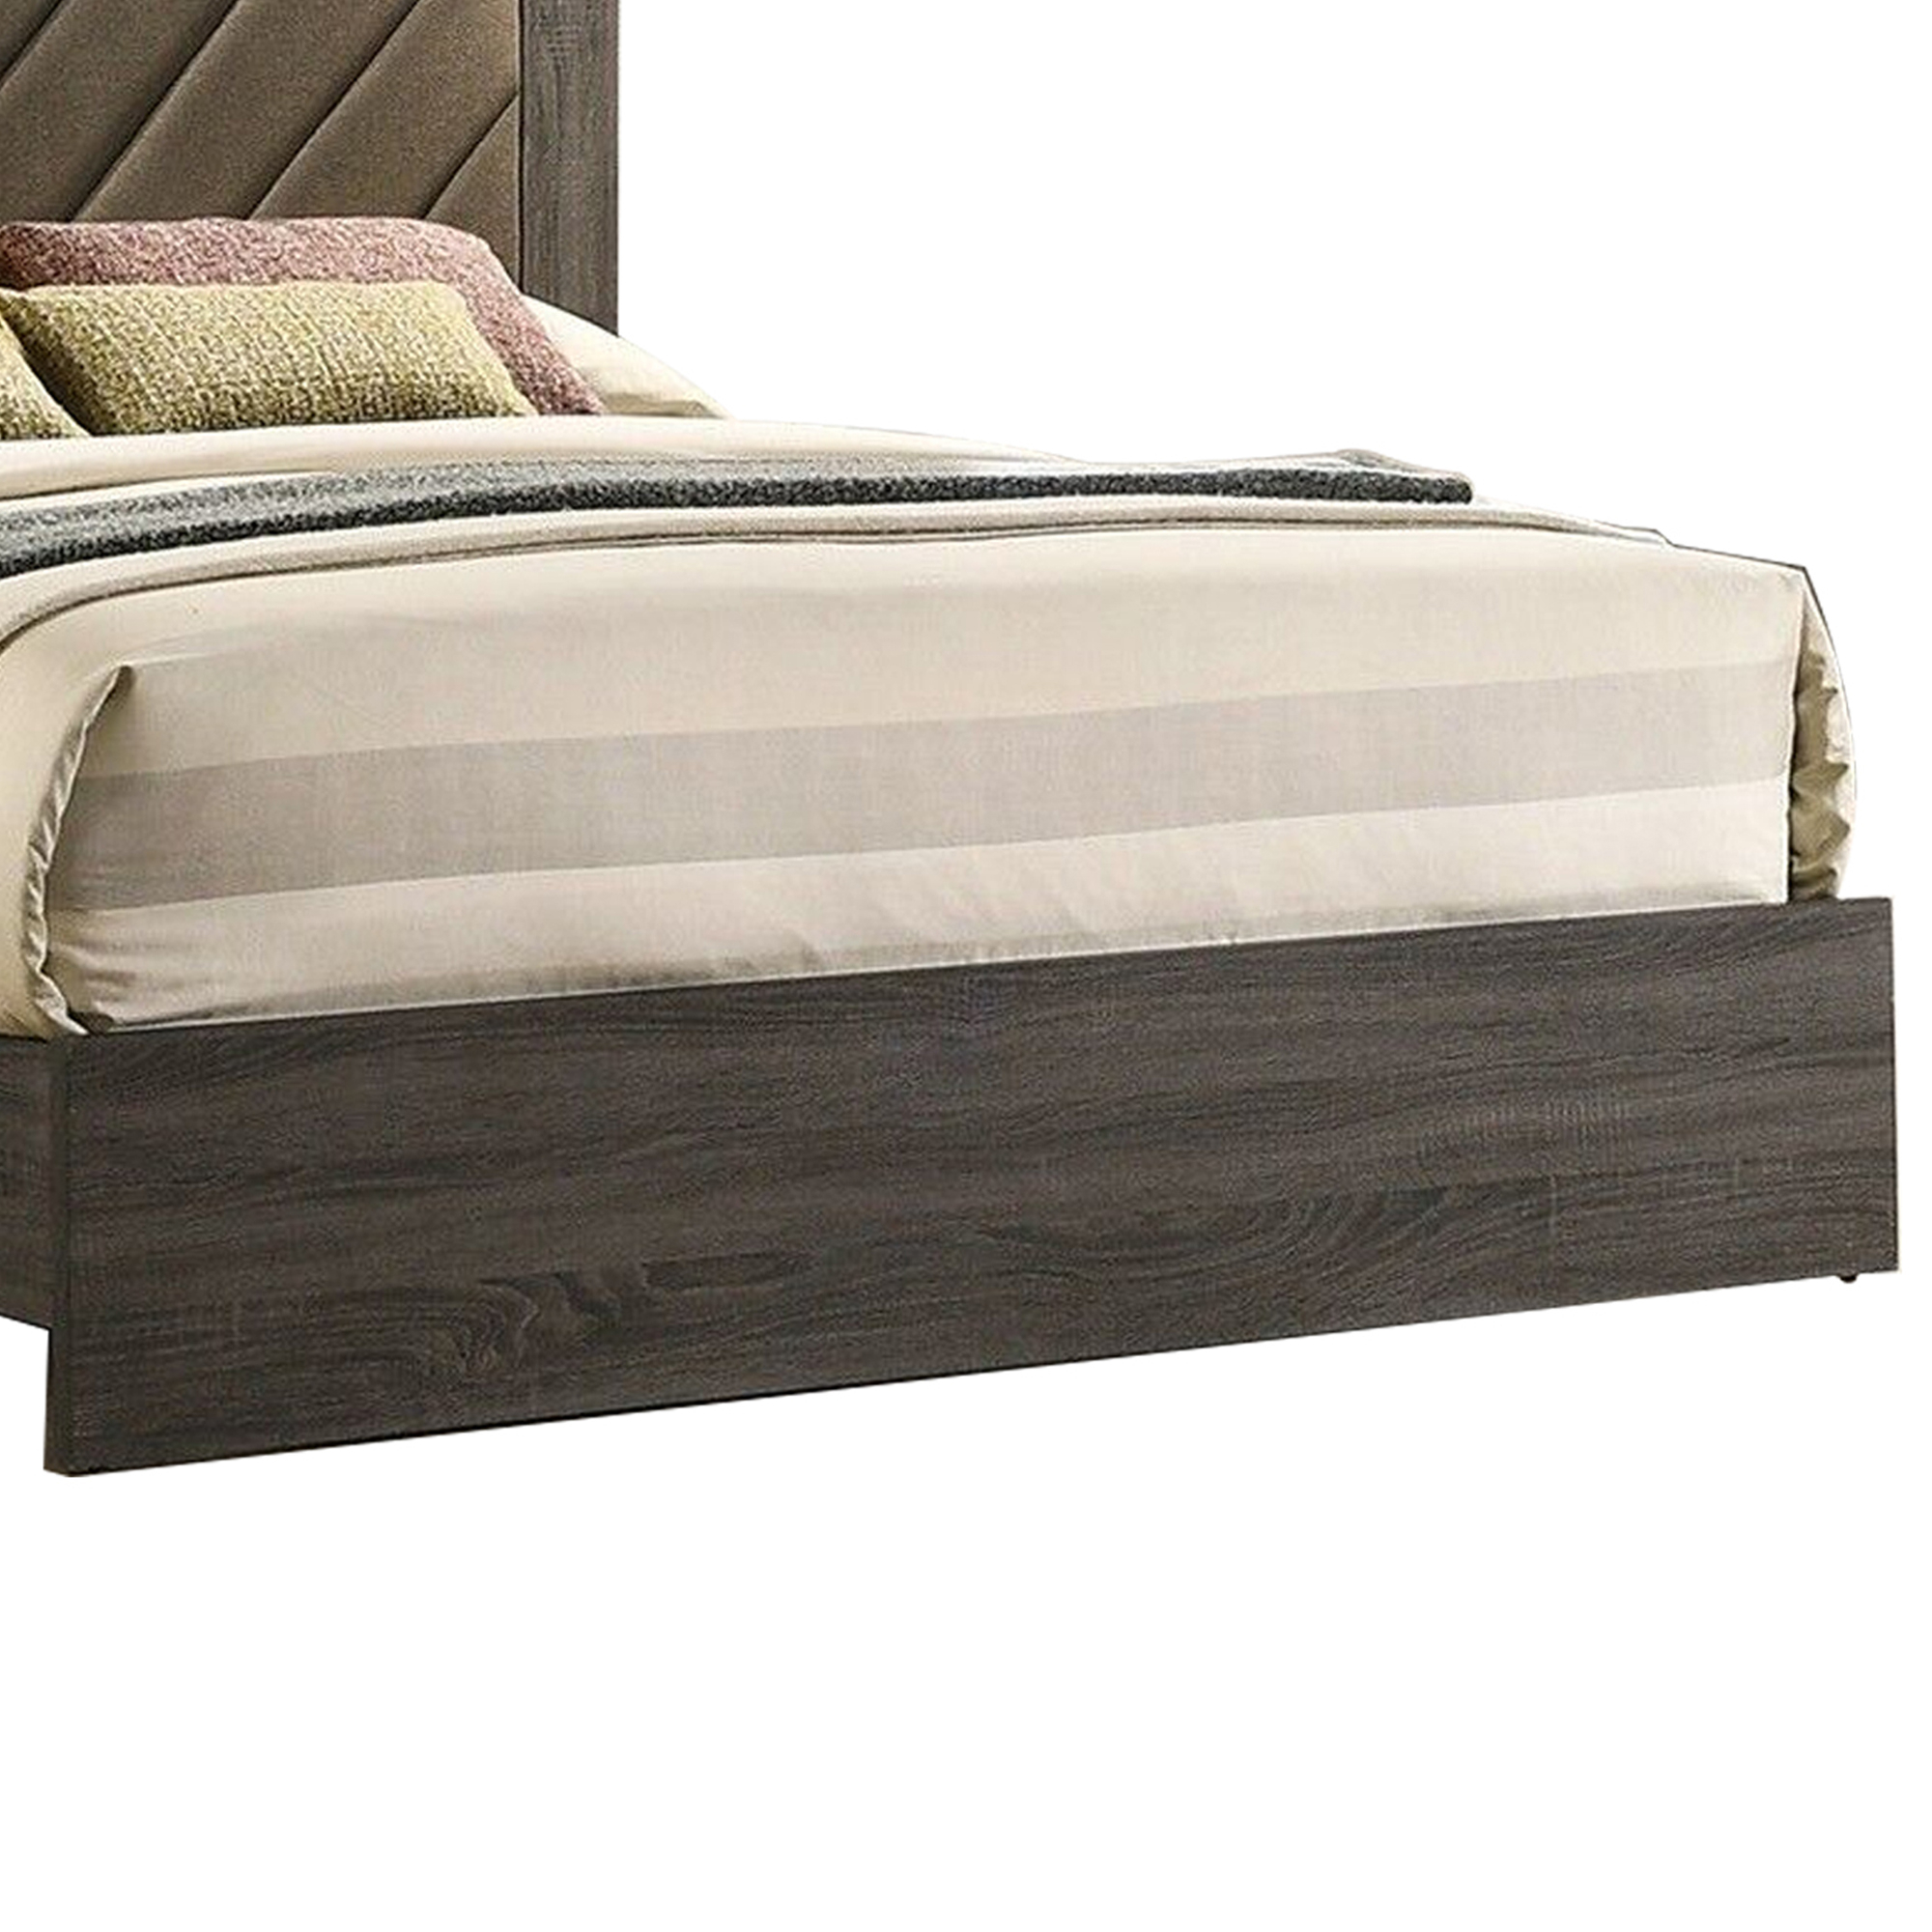 Cato Upholstered California King Bed, Tufted Brown Headboard, Dark Gray- Saltoro Sherpi